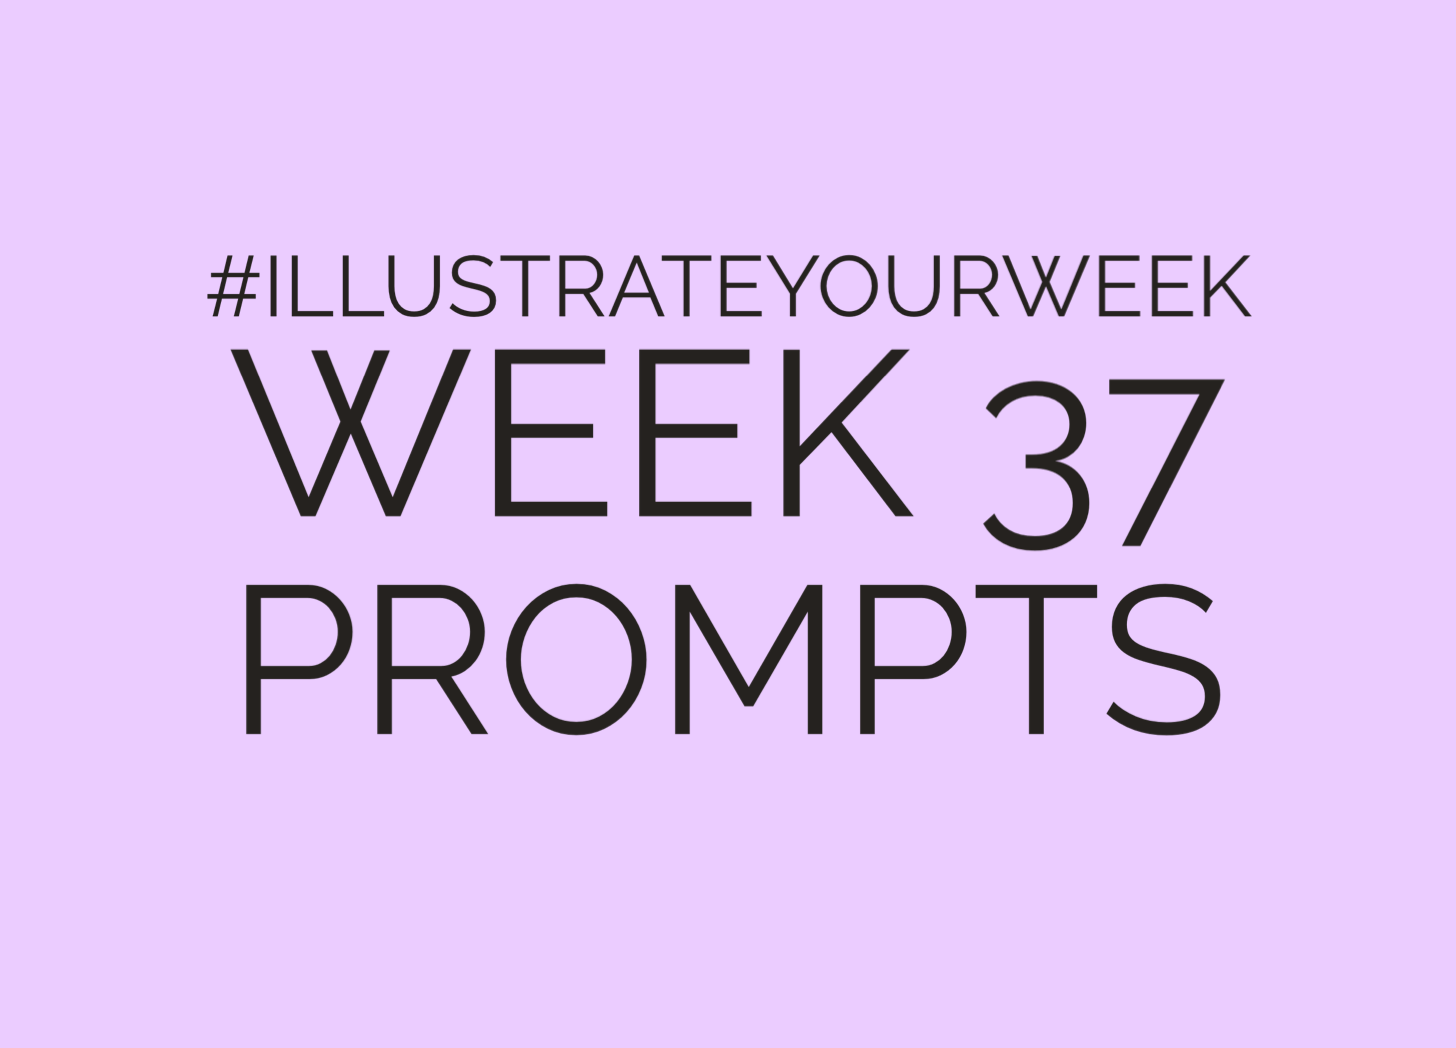 Week 37 Illustrate Your Week Prompts Headline Only